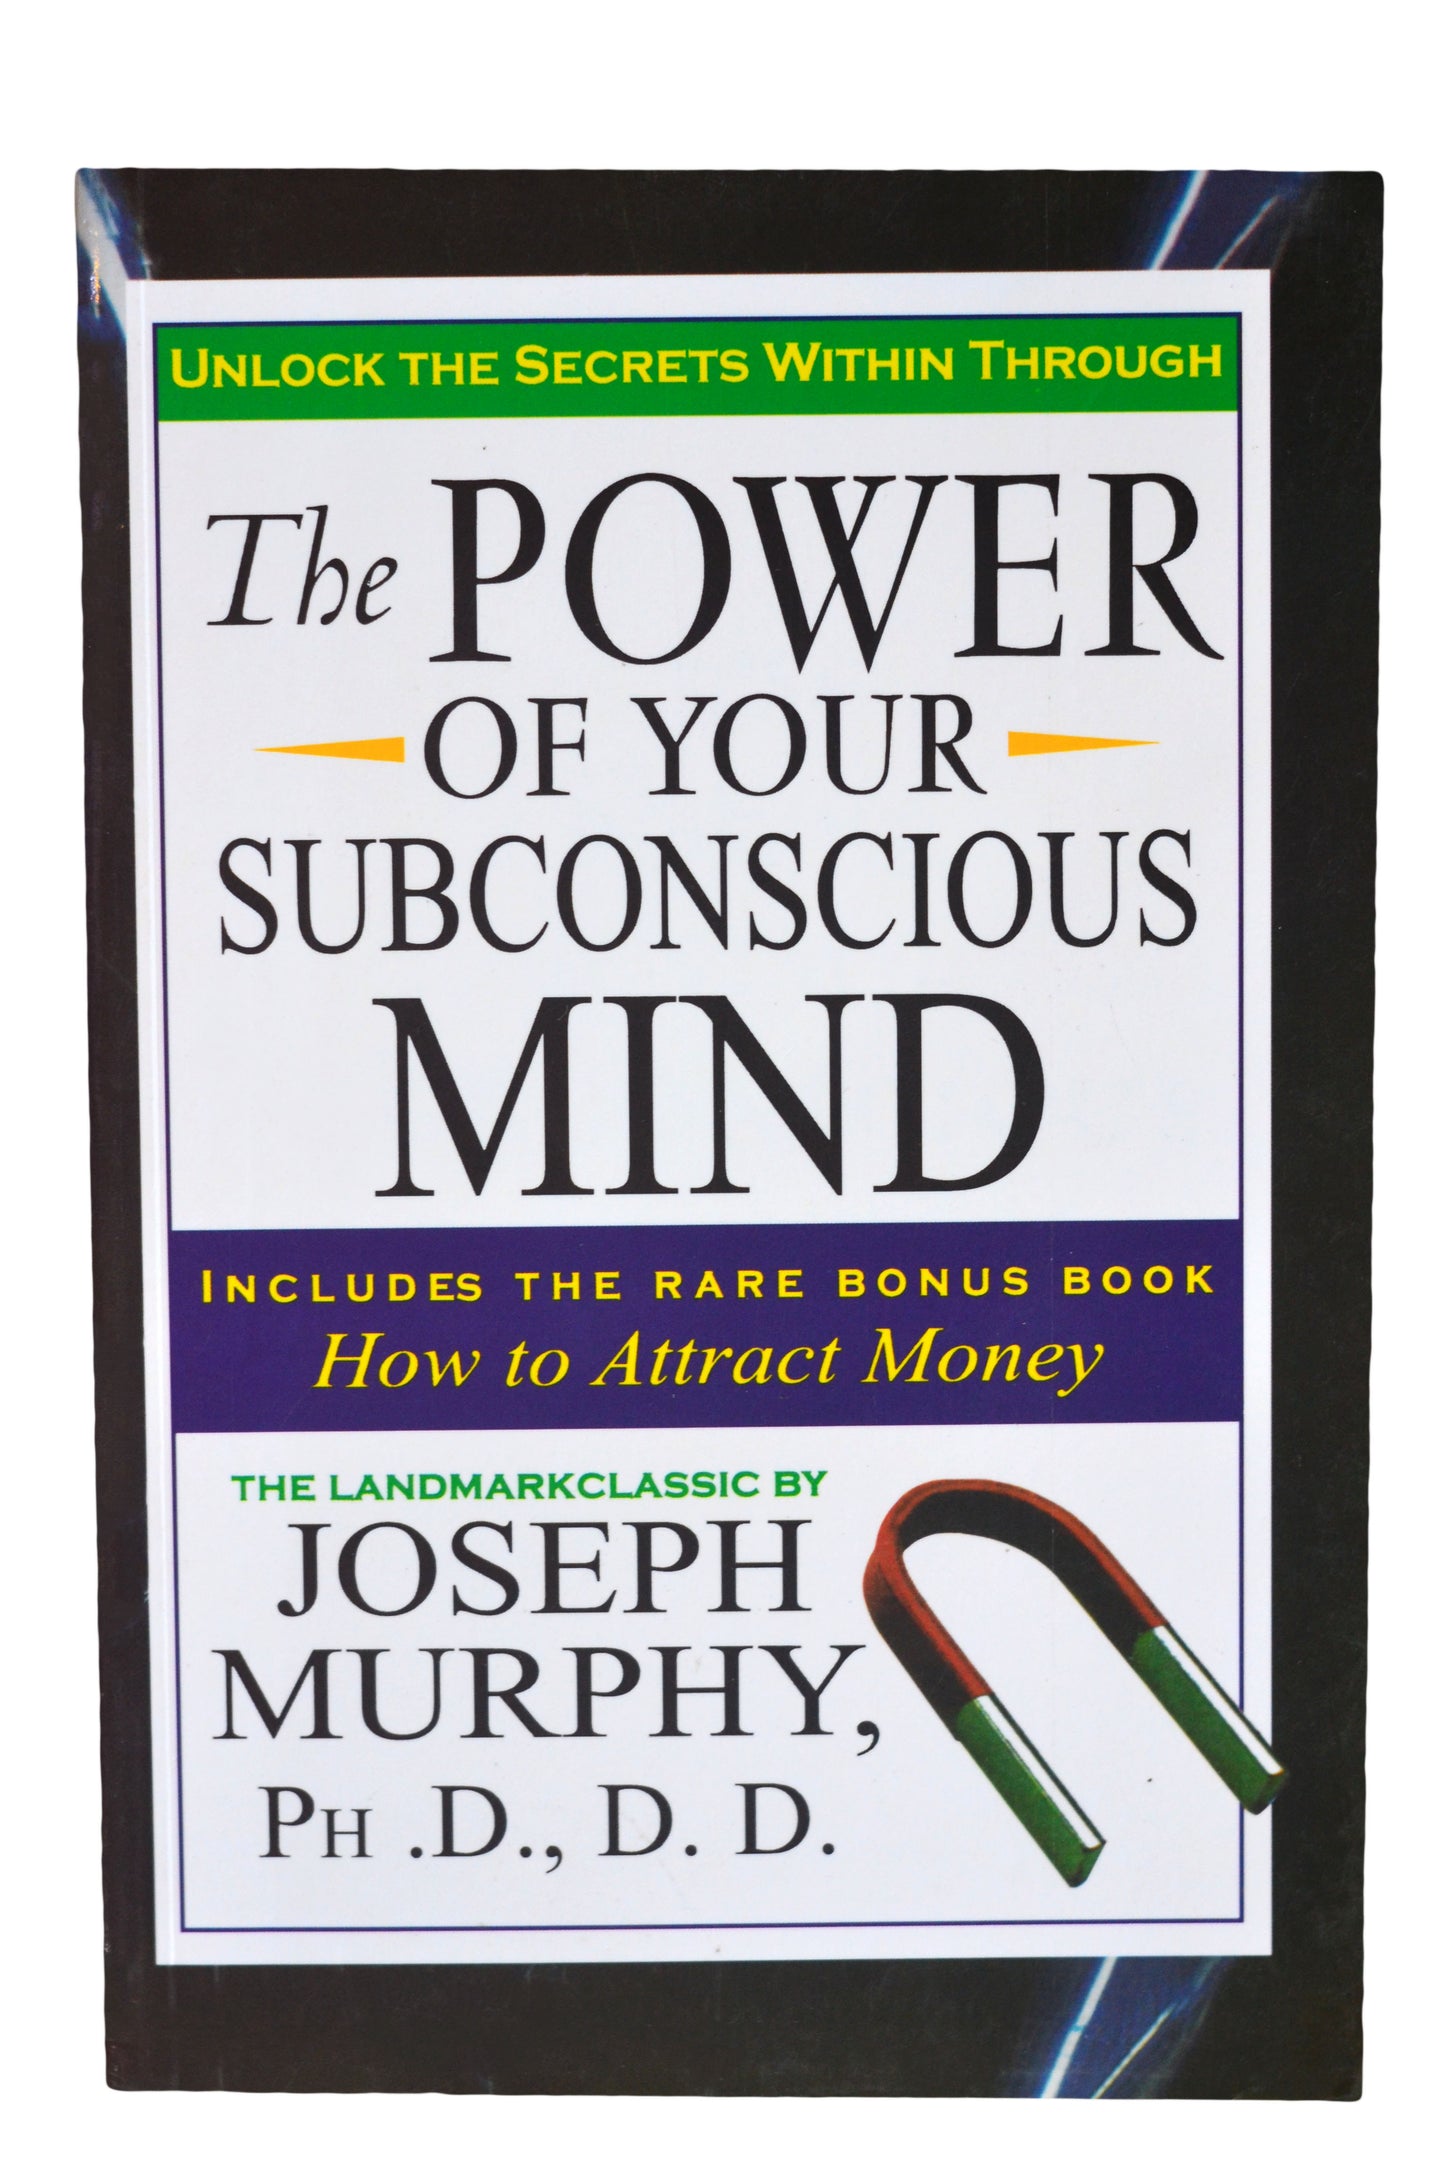 THE POWER OF THE SUBCONSCIOUS MIND by Joseph Murphy PH.D.D.D